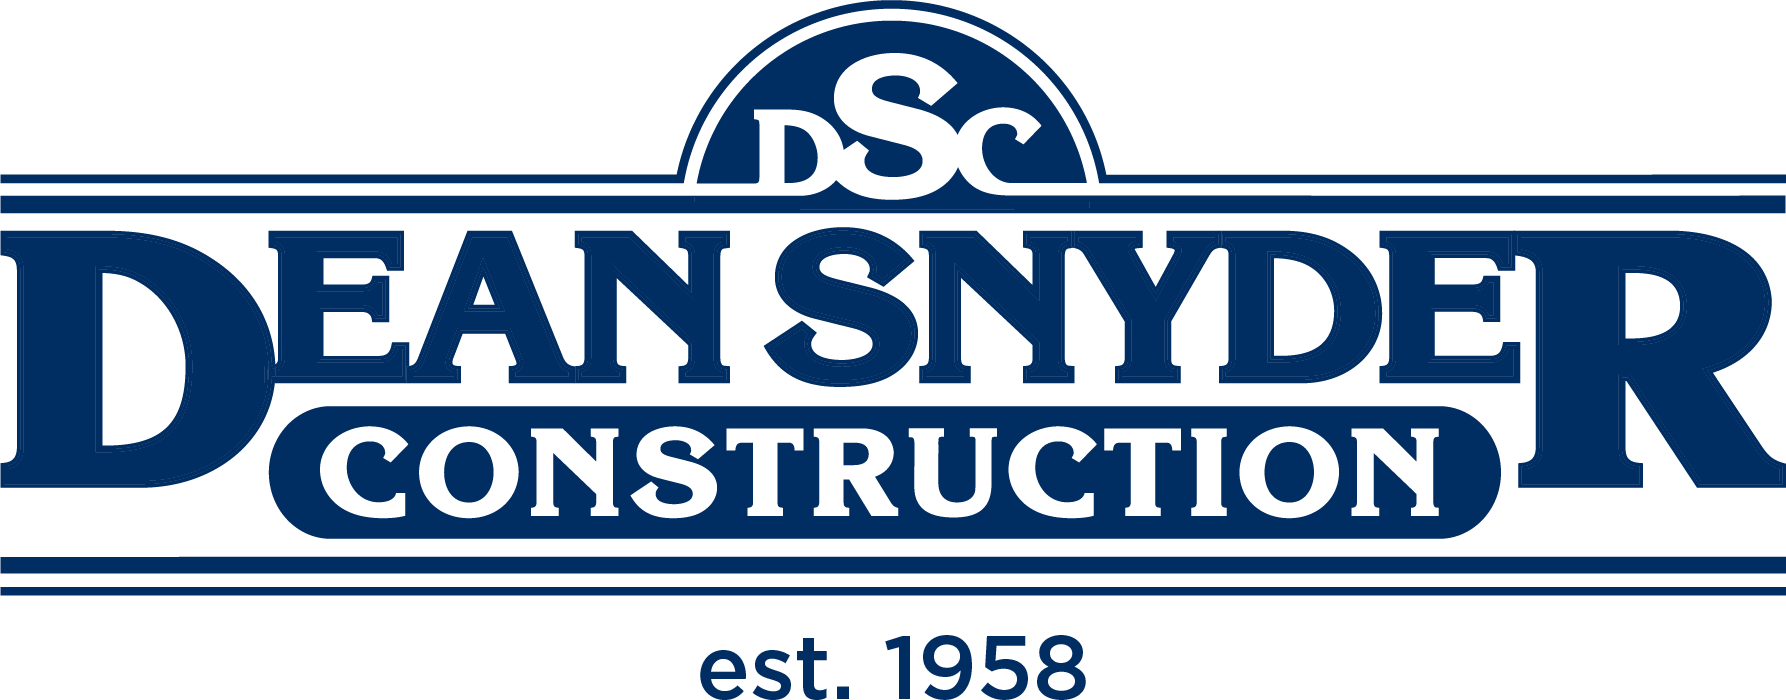 Dean Snyder Construction logo